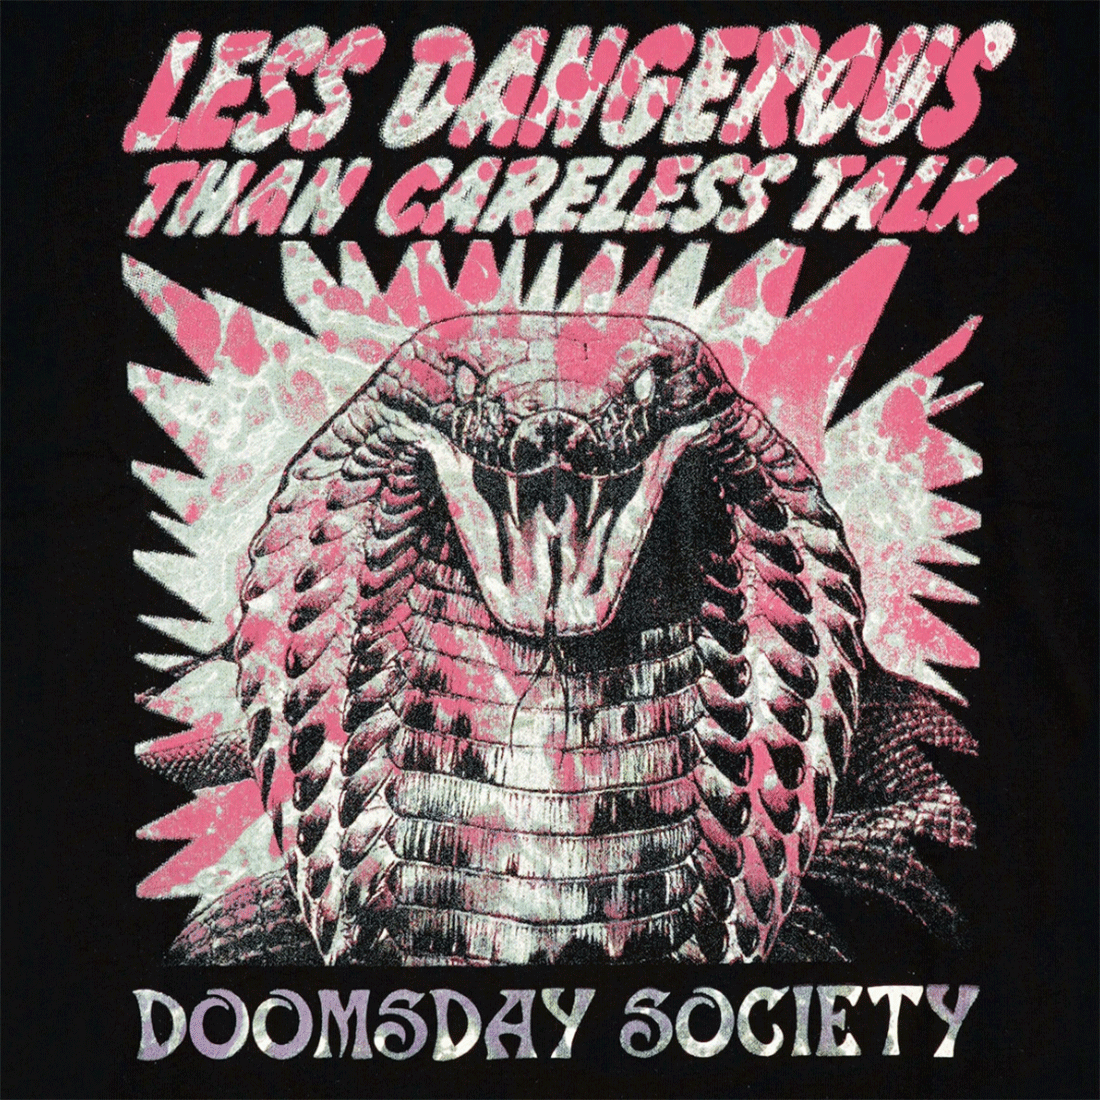 Doomsday Short Sleeve T-Shirt - Careless Tee-Black